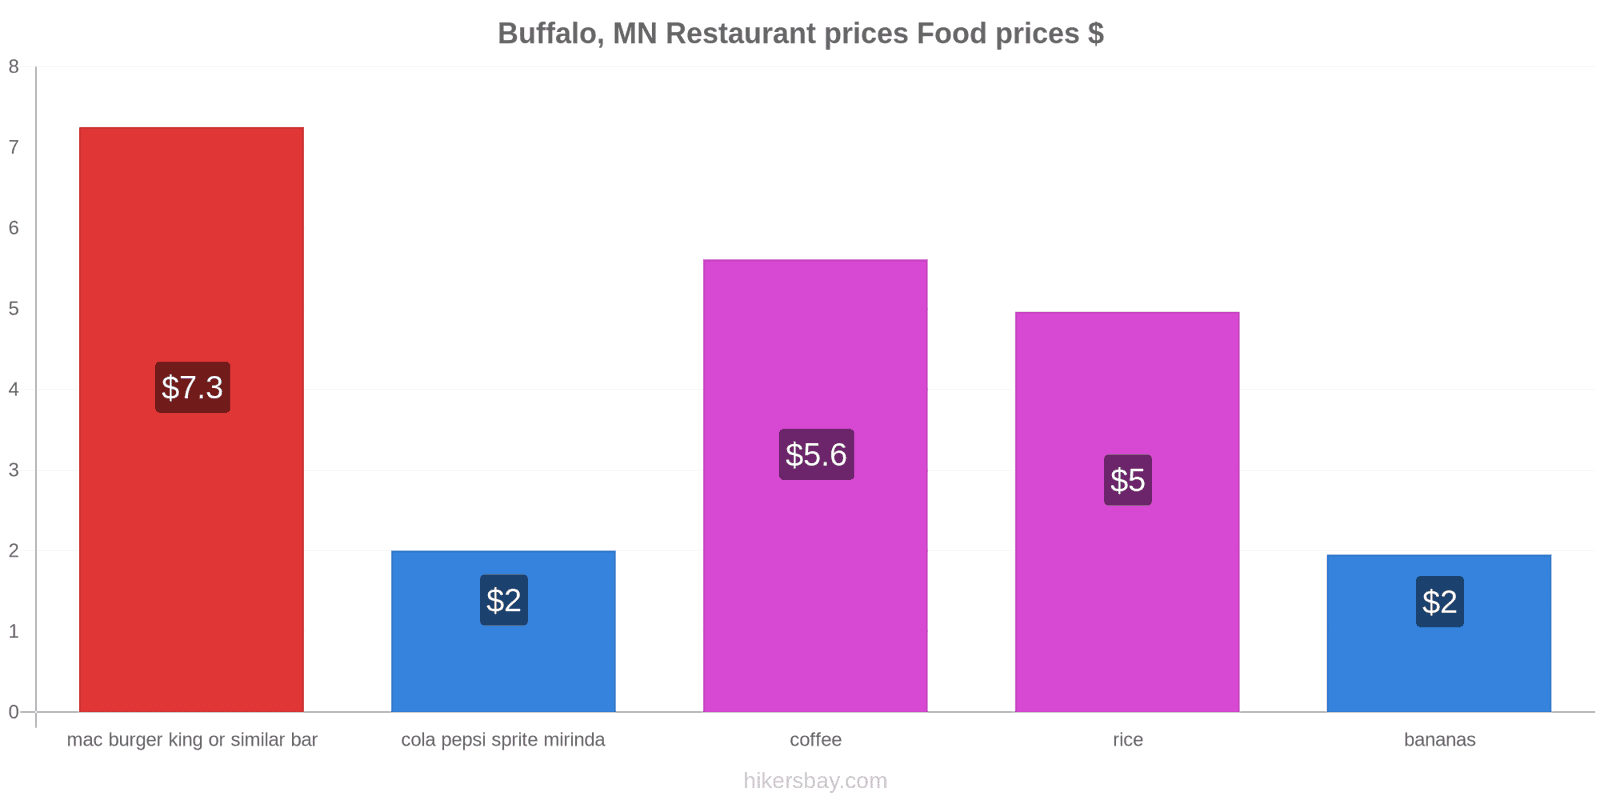 Buffalo, MN price changes hikersbay.com